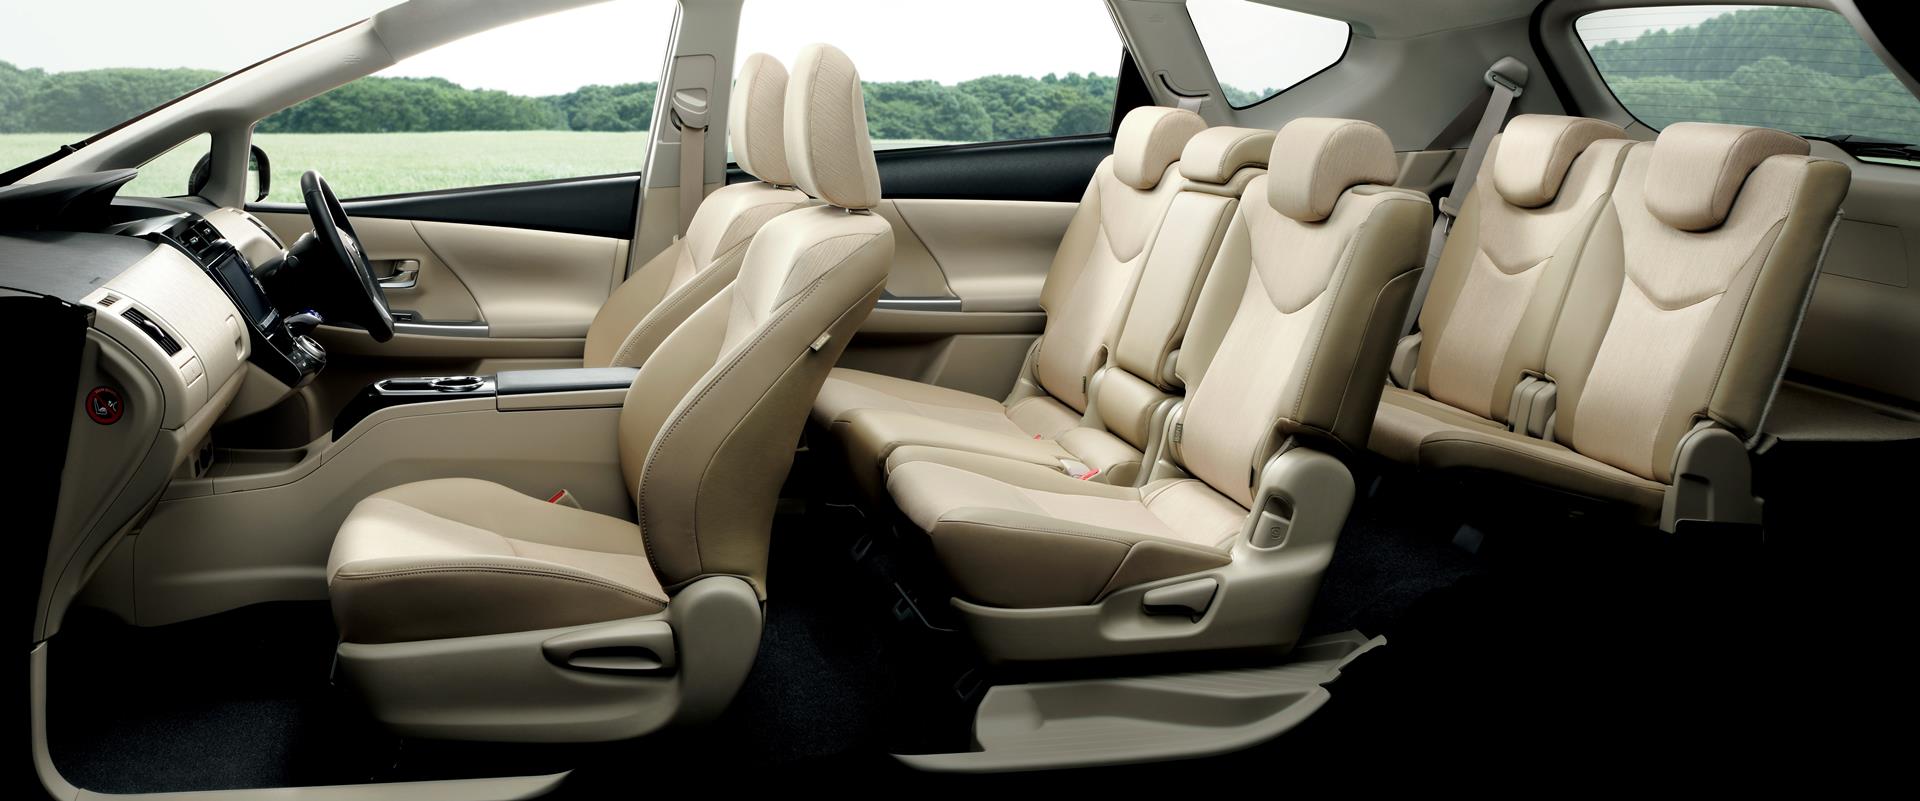 G 7人乗り 設定色 グレージュ オプション装着車 トヨタ自動車株式会社 公式企業サイト